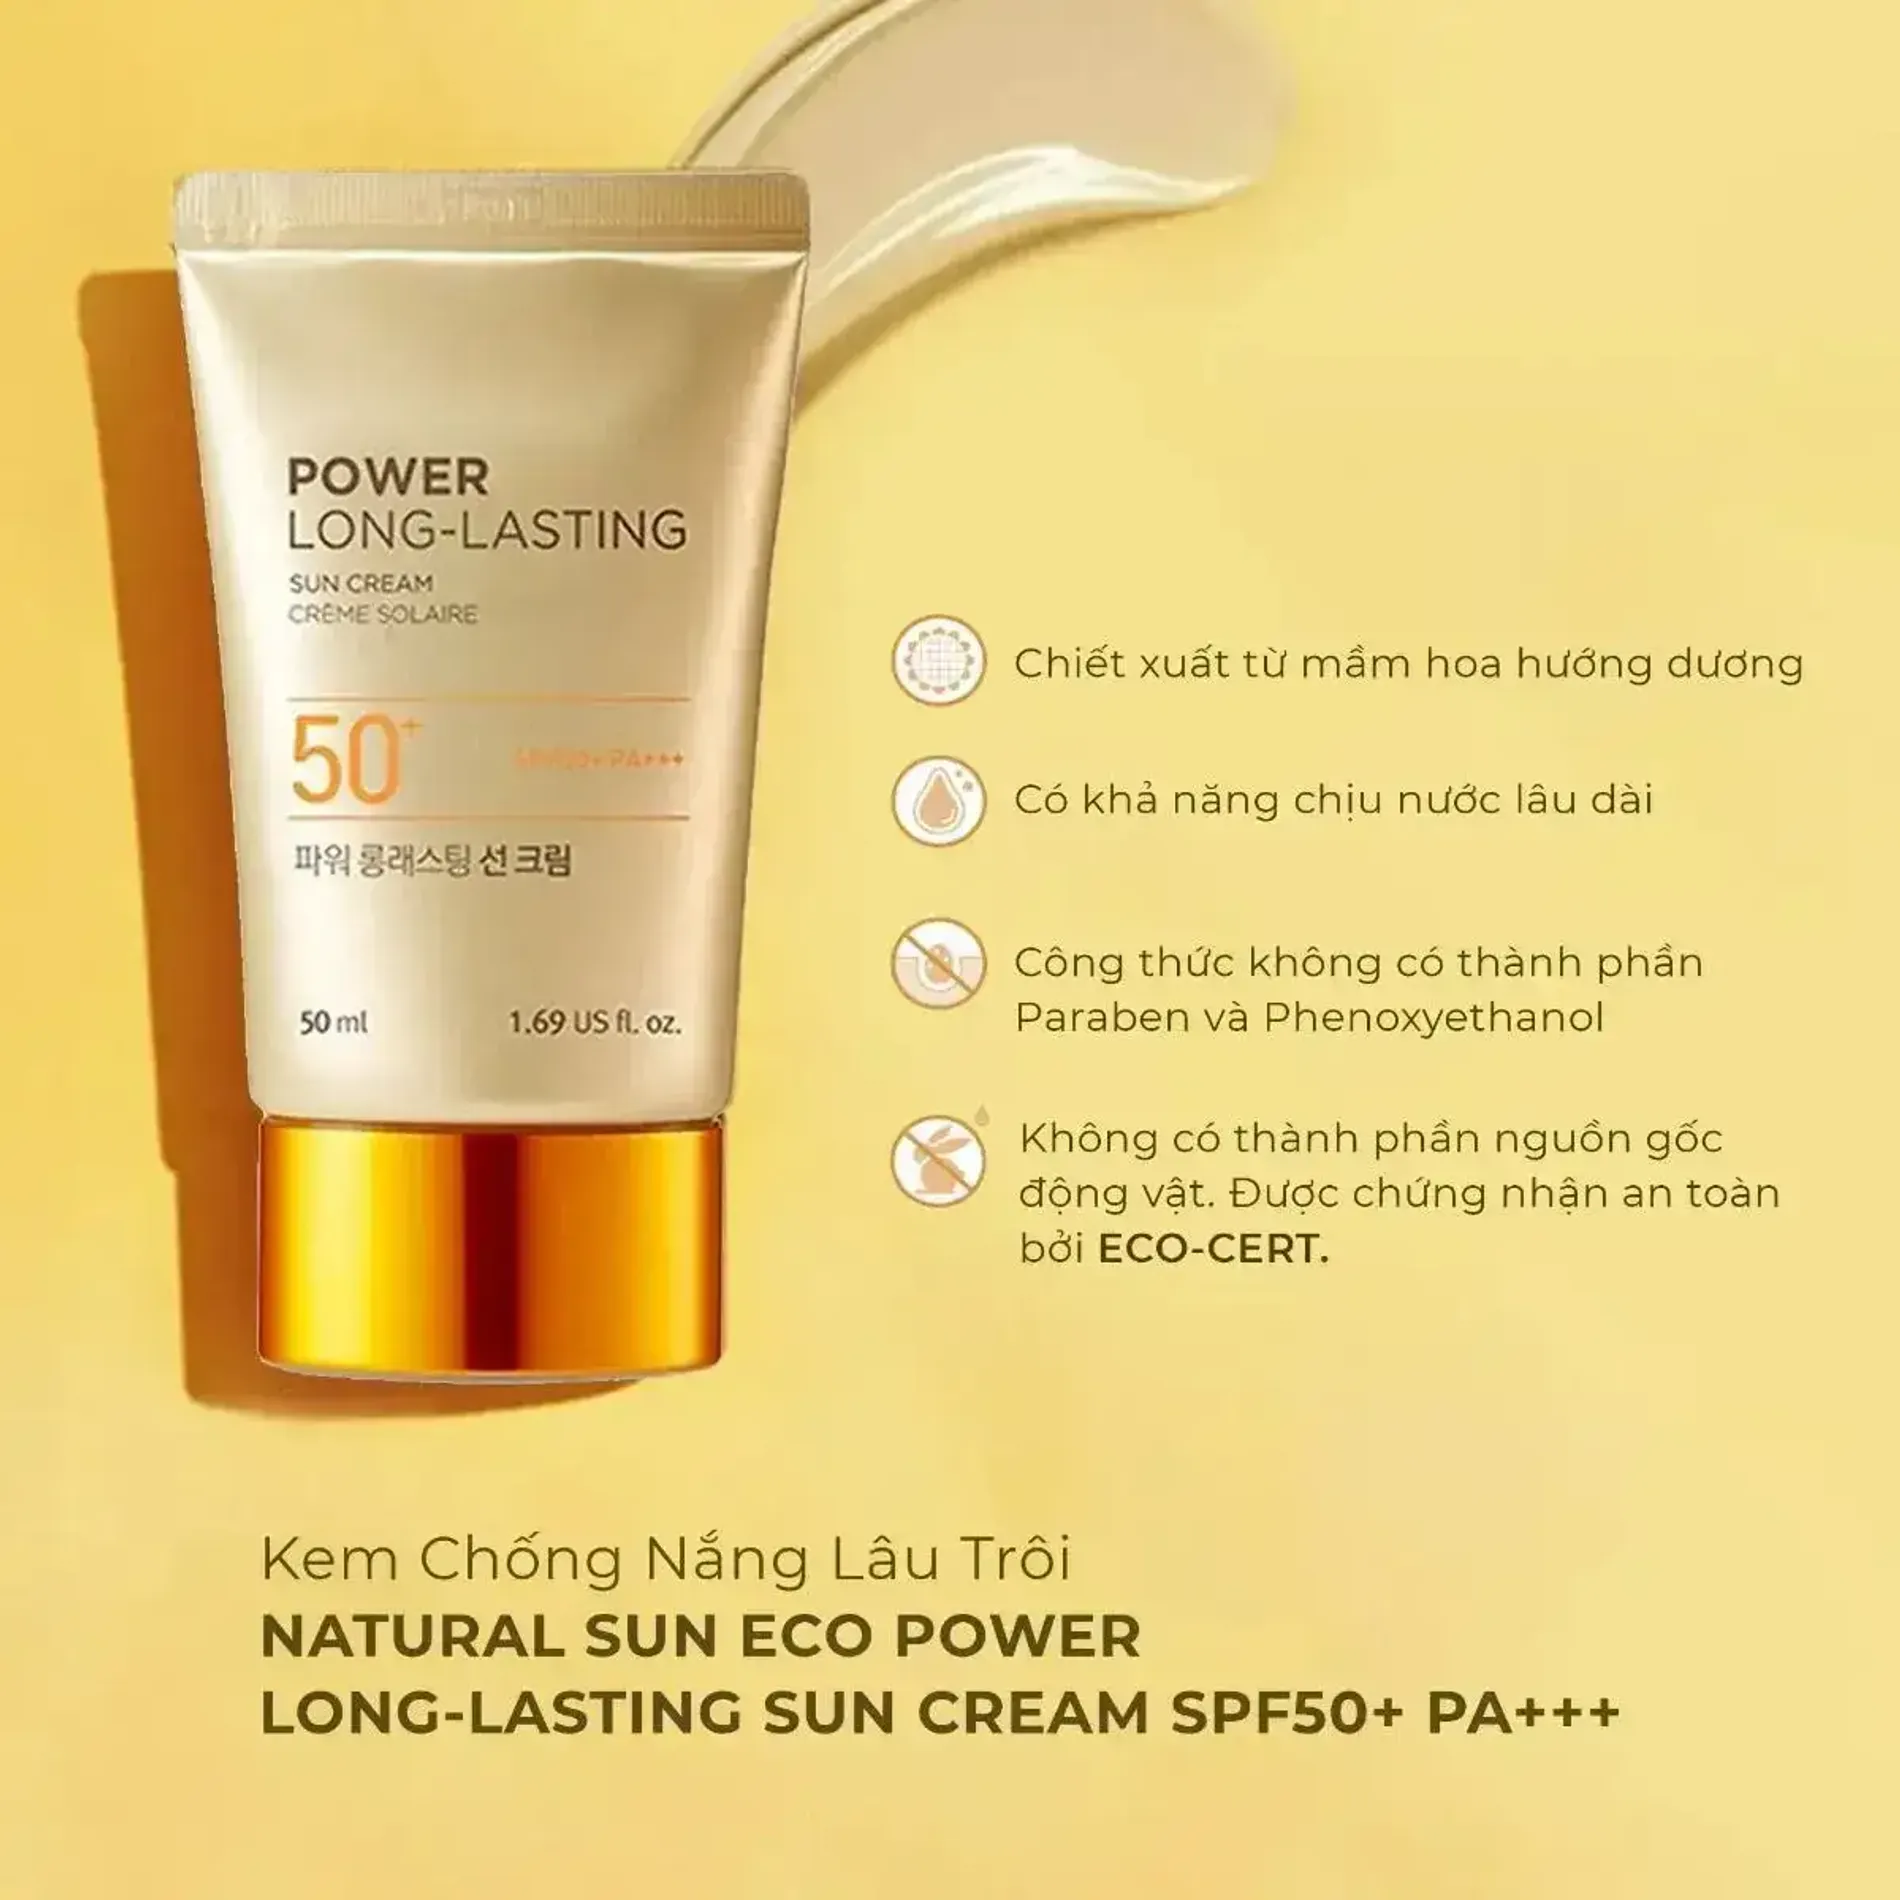 kem-chong-nang-lau-troi-tfs-natural-sun-eco-power-long-lasting-sun-cream-spf50-pa-50ml-3